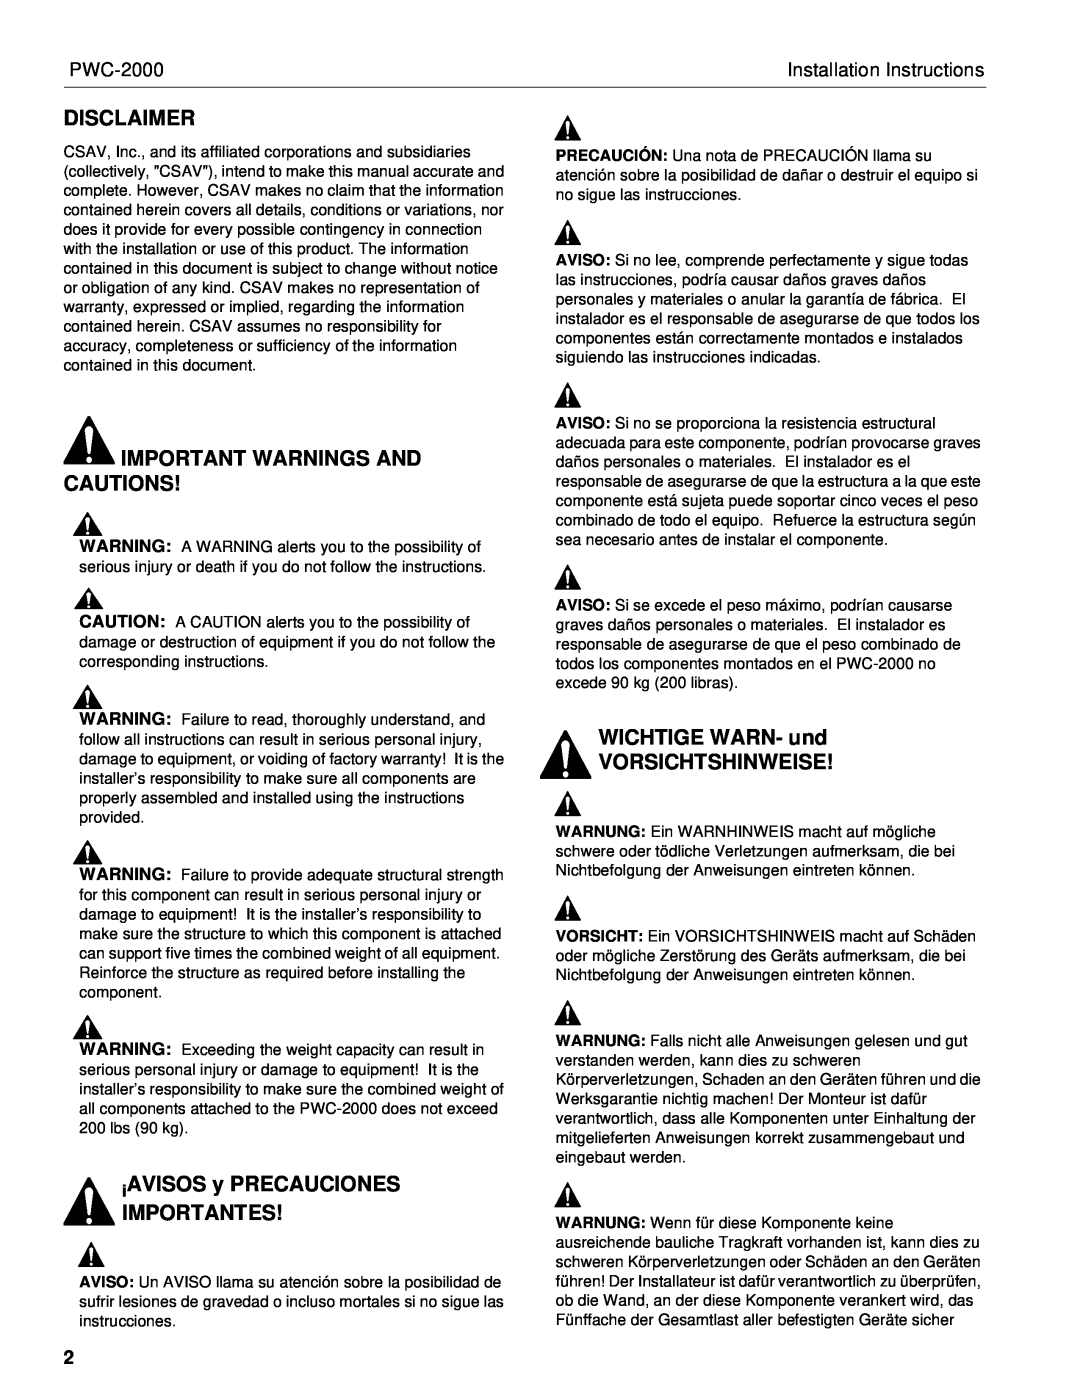 Chief Manufacturing PWC-2000 Disclaimer, Important Warnings And Cautions, iAVISOS y PRECAUCIONES IMPORTANTES 